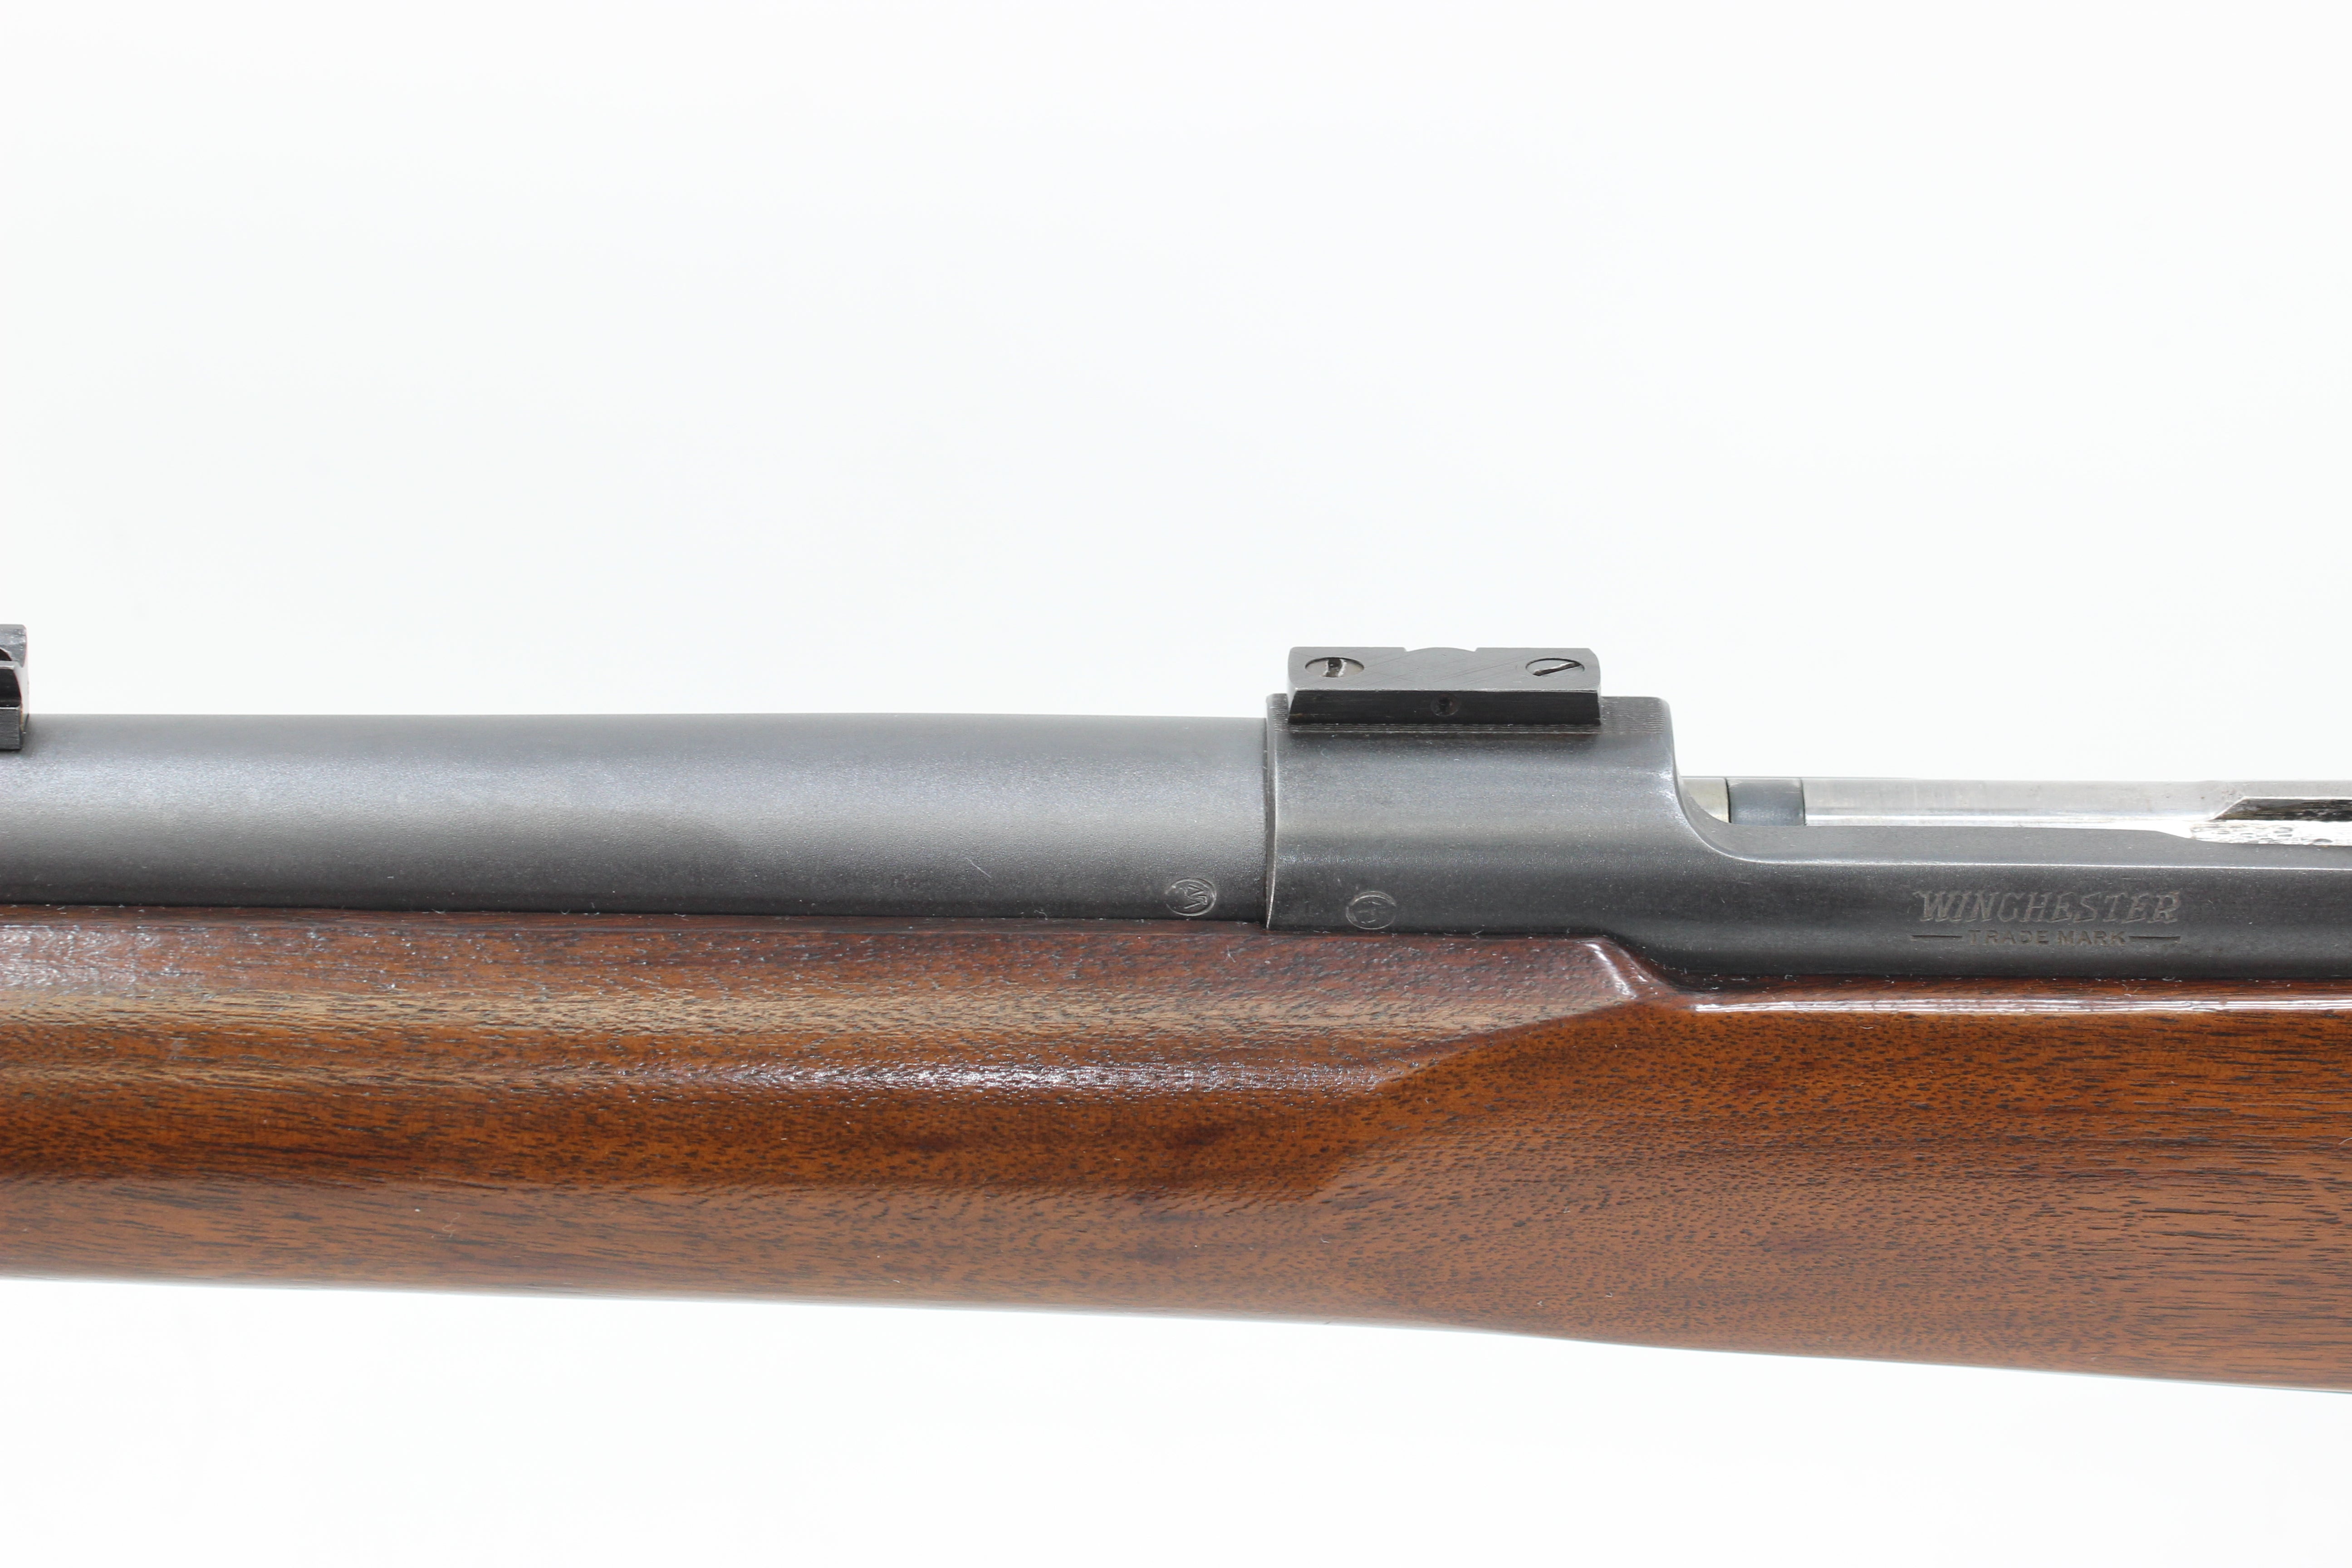 .220 Swift Target Rifle - 1949